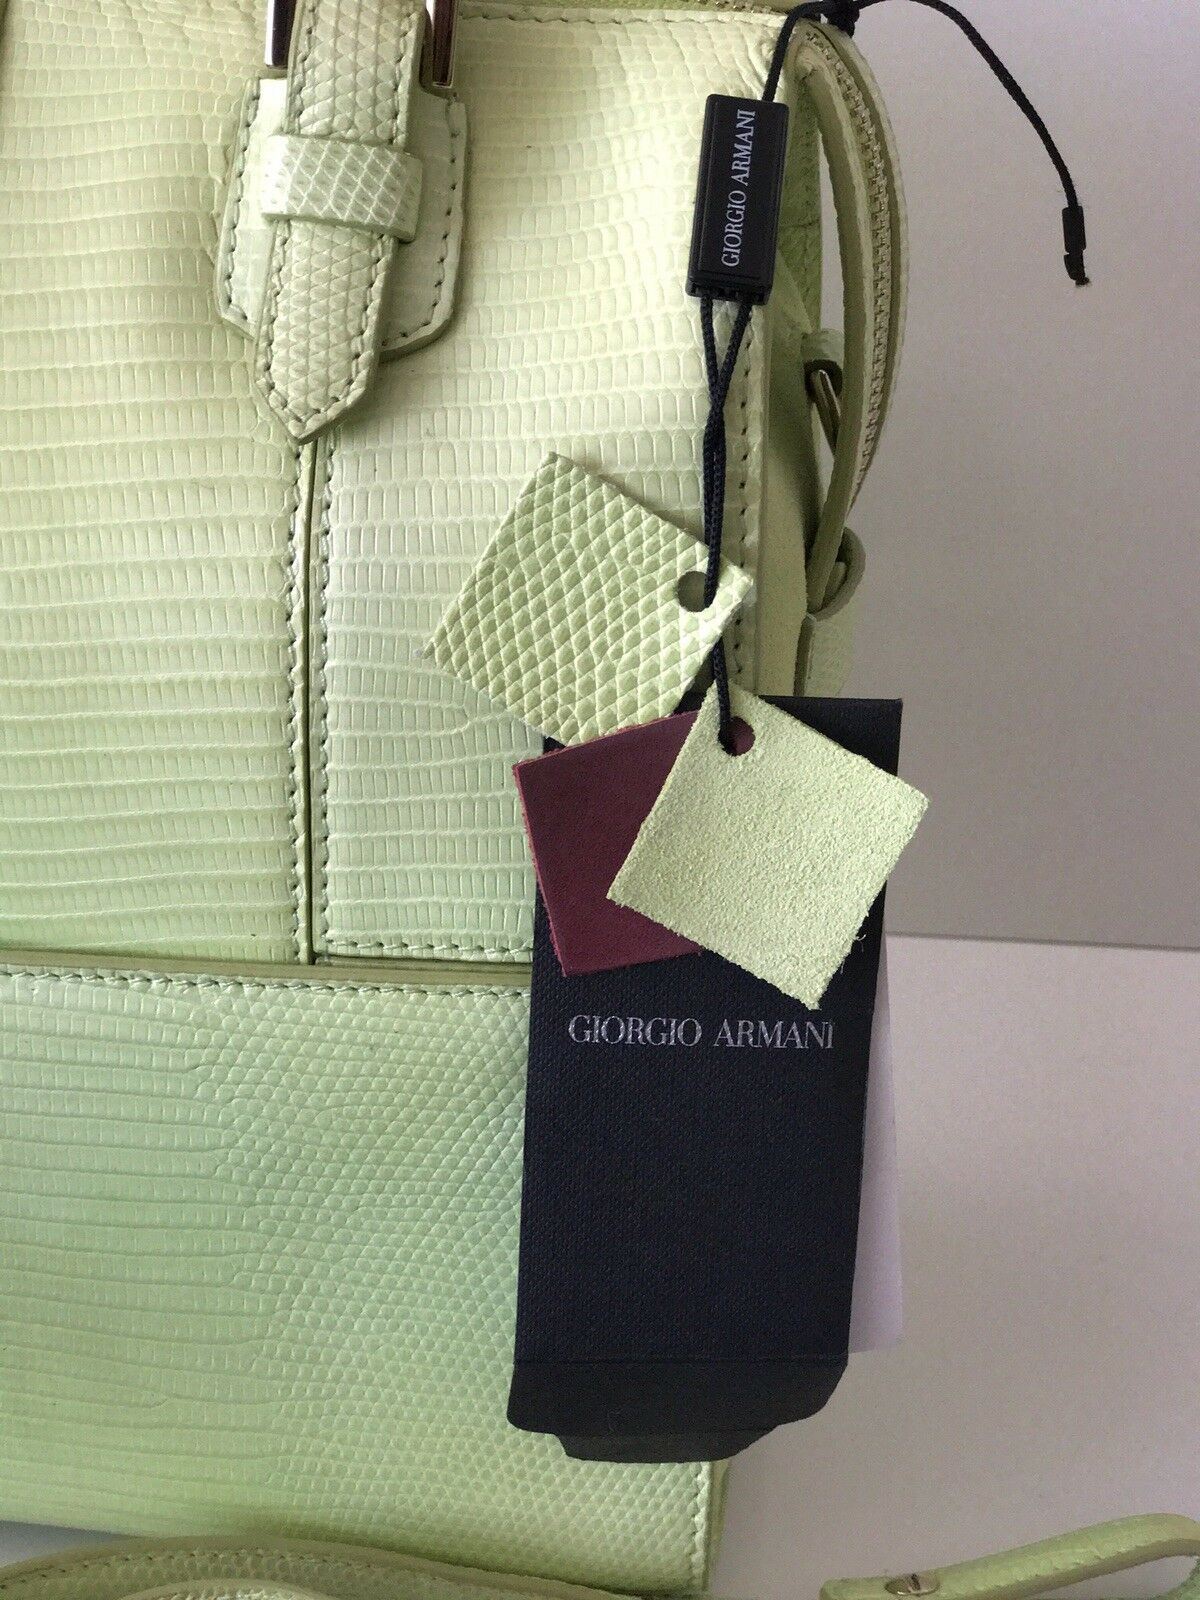 NWT $6225 Giorgio Armani Milano Bauletto Piccolo Lizard Leather Handbag Italy